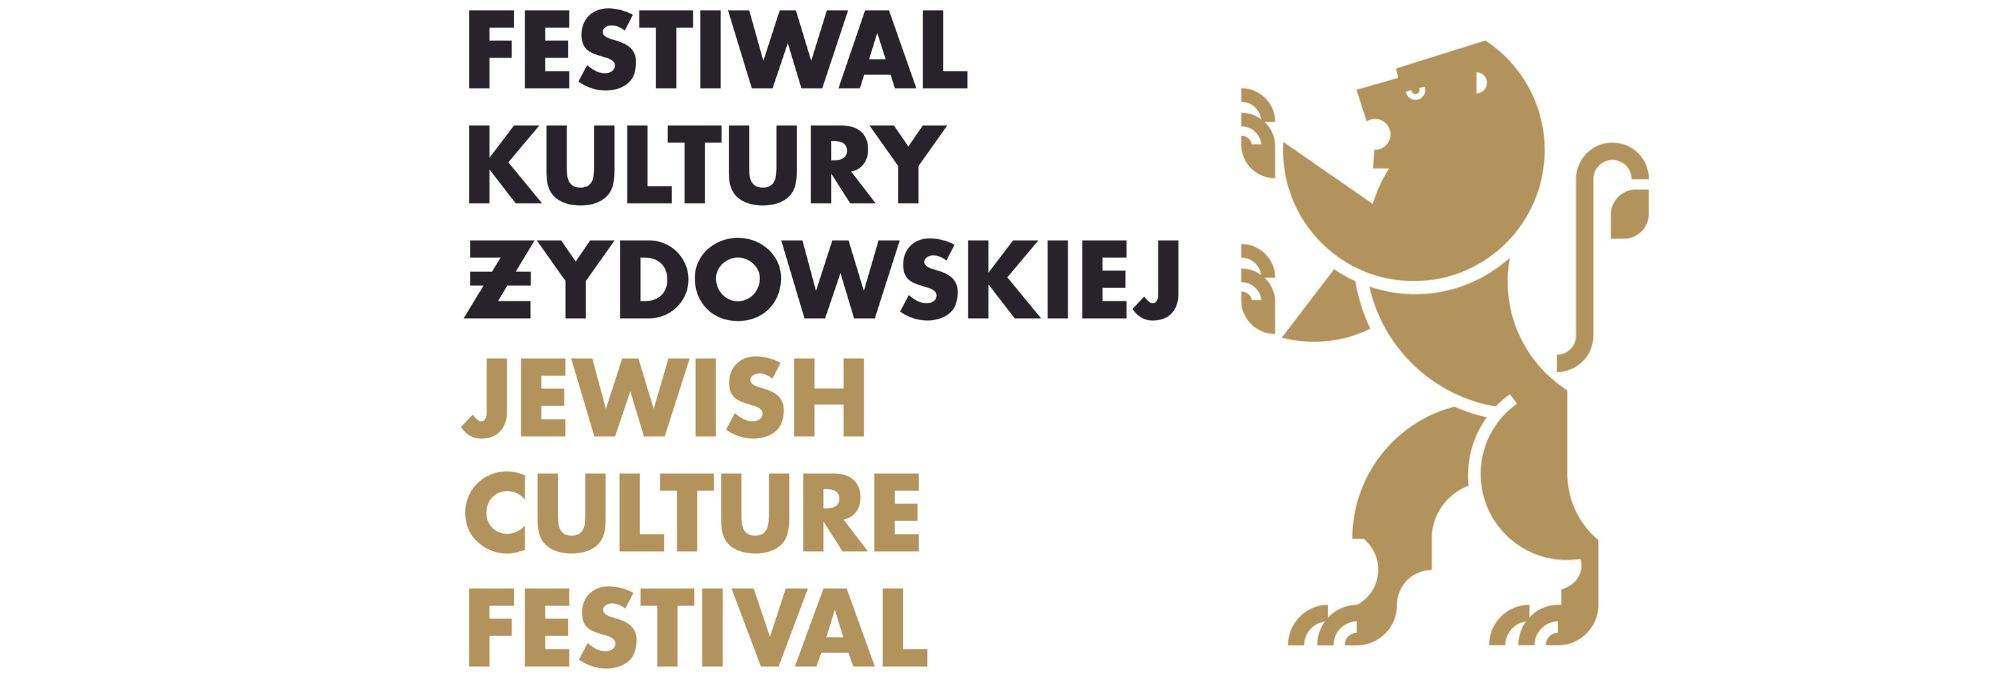 32nd Jewish Culture Festival in Krakow: The "Ruah" Breeze